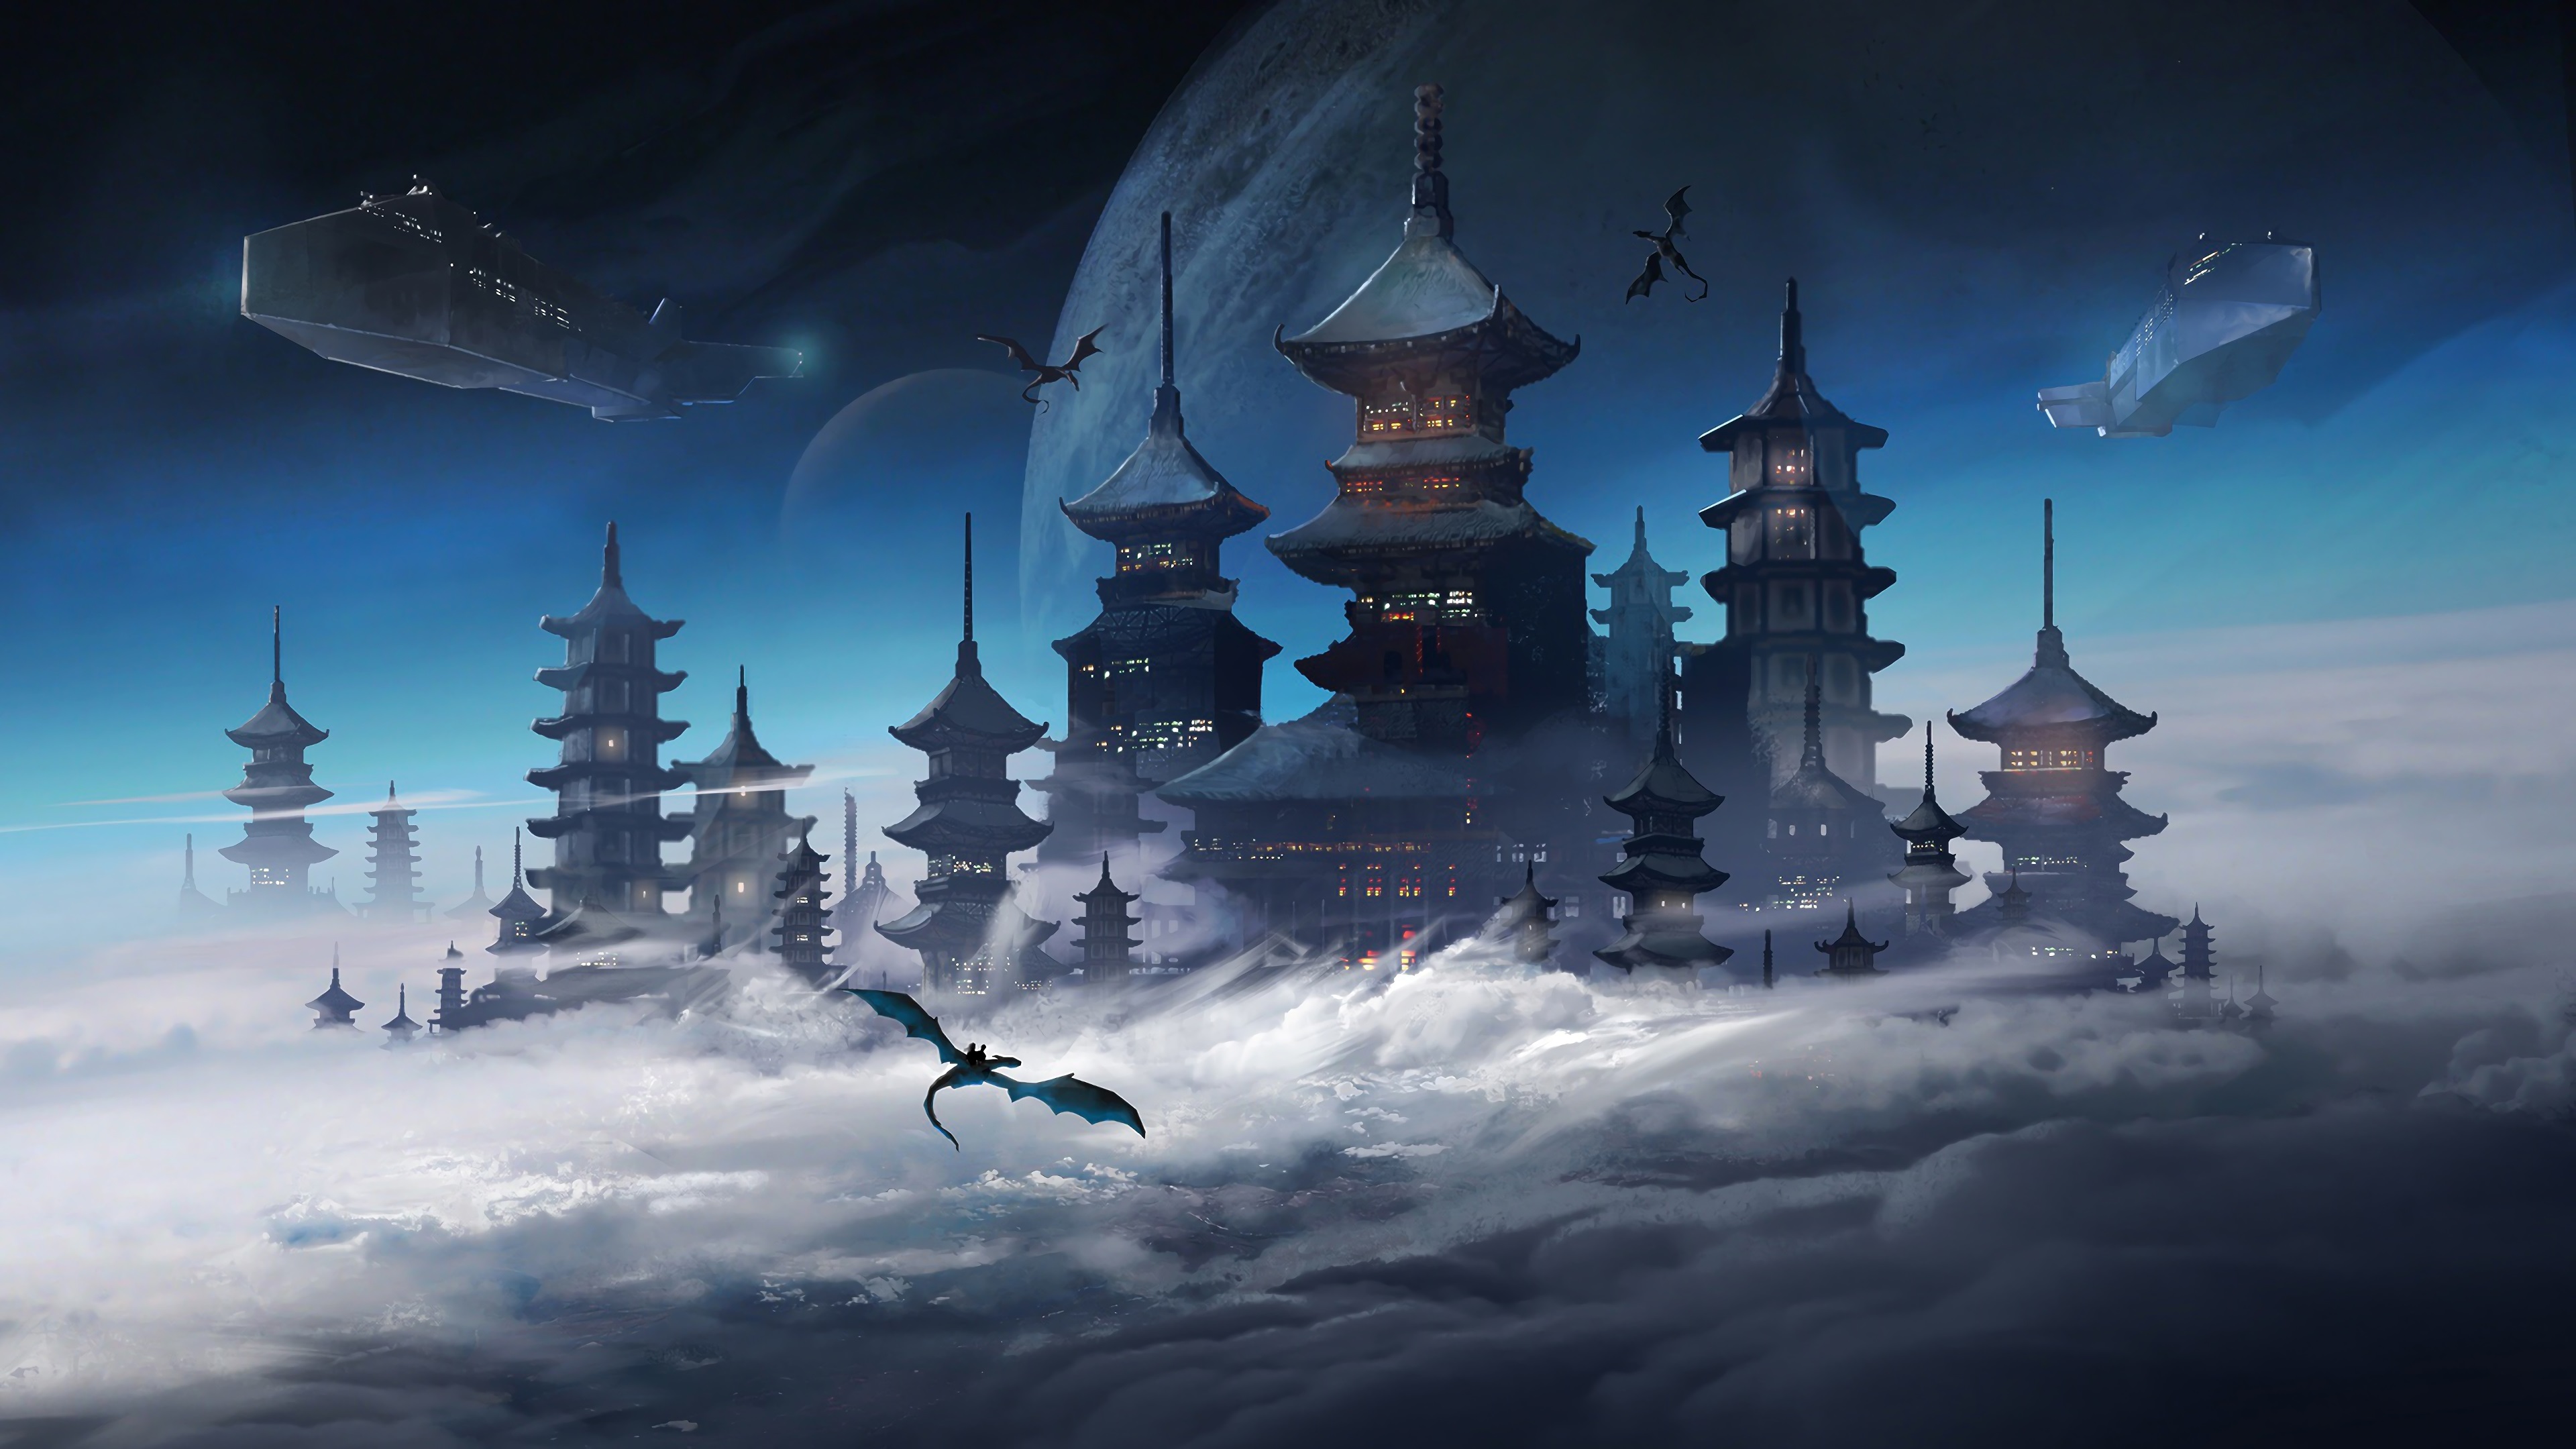 dragon, sci fi, japanese, spaceship, castle, building, fantasy, city, cloud Aesthetic wallpaper